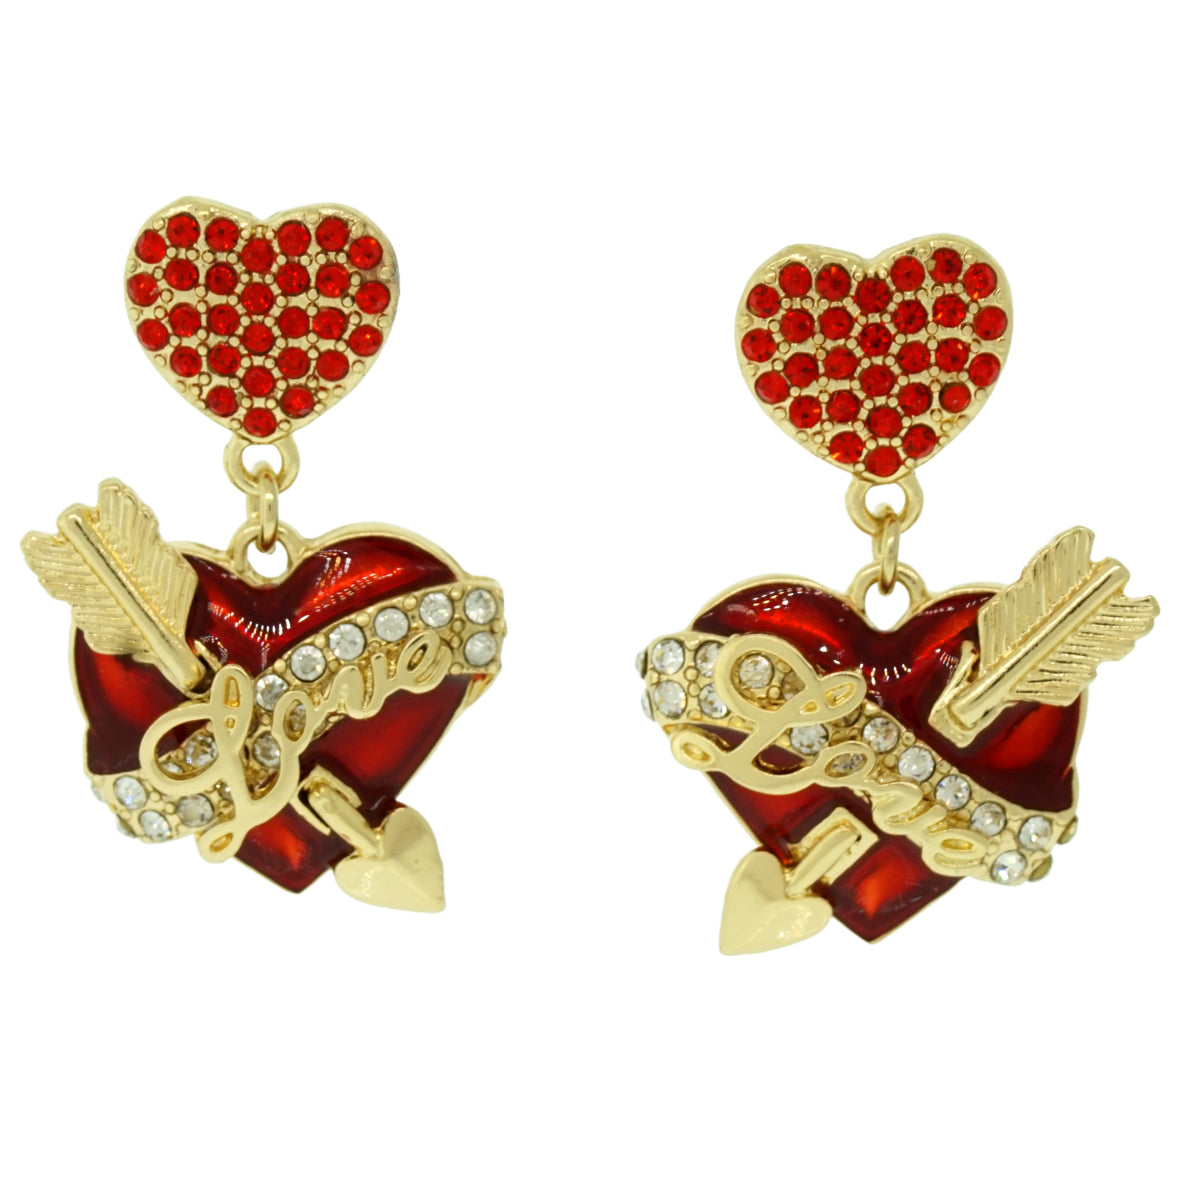 Love and Heart Arrow Dangle Earrings